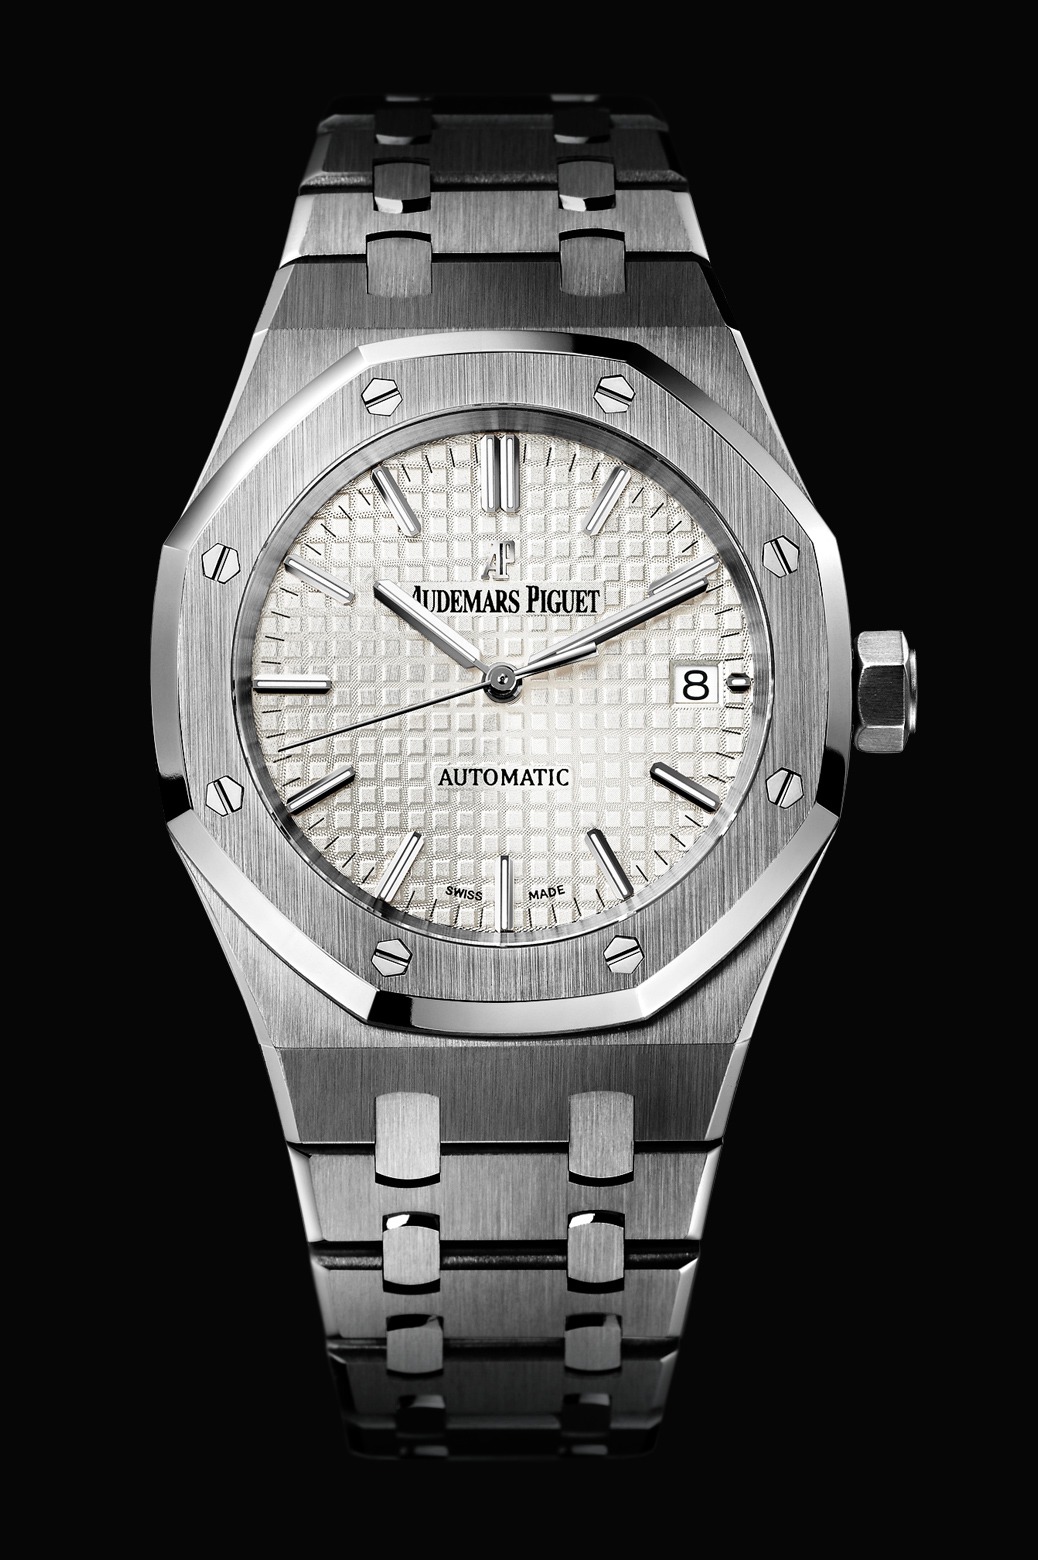 Audemars Piguet Royal Oak Automatic Steel watch REF: 15450ST.OO.1256ST.01